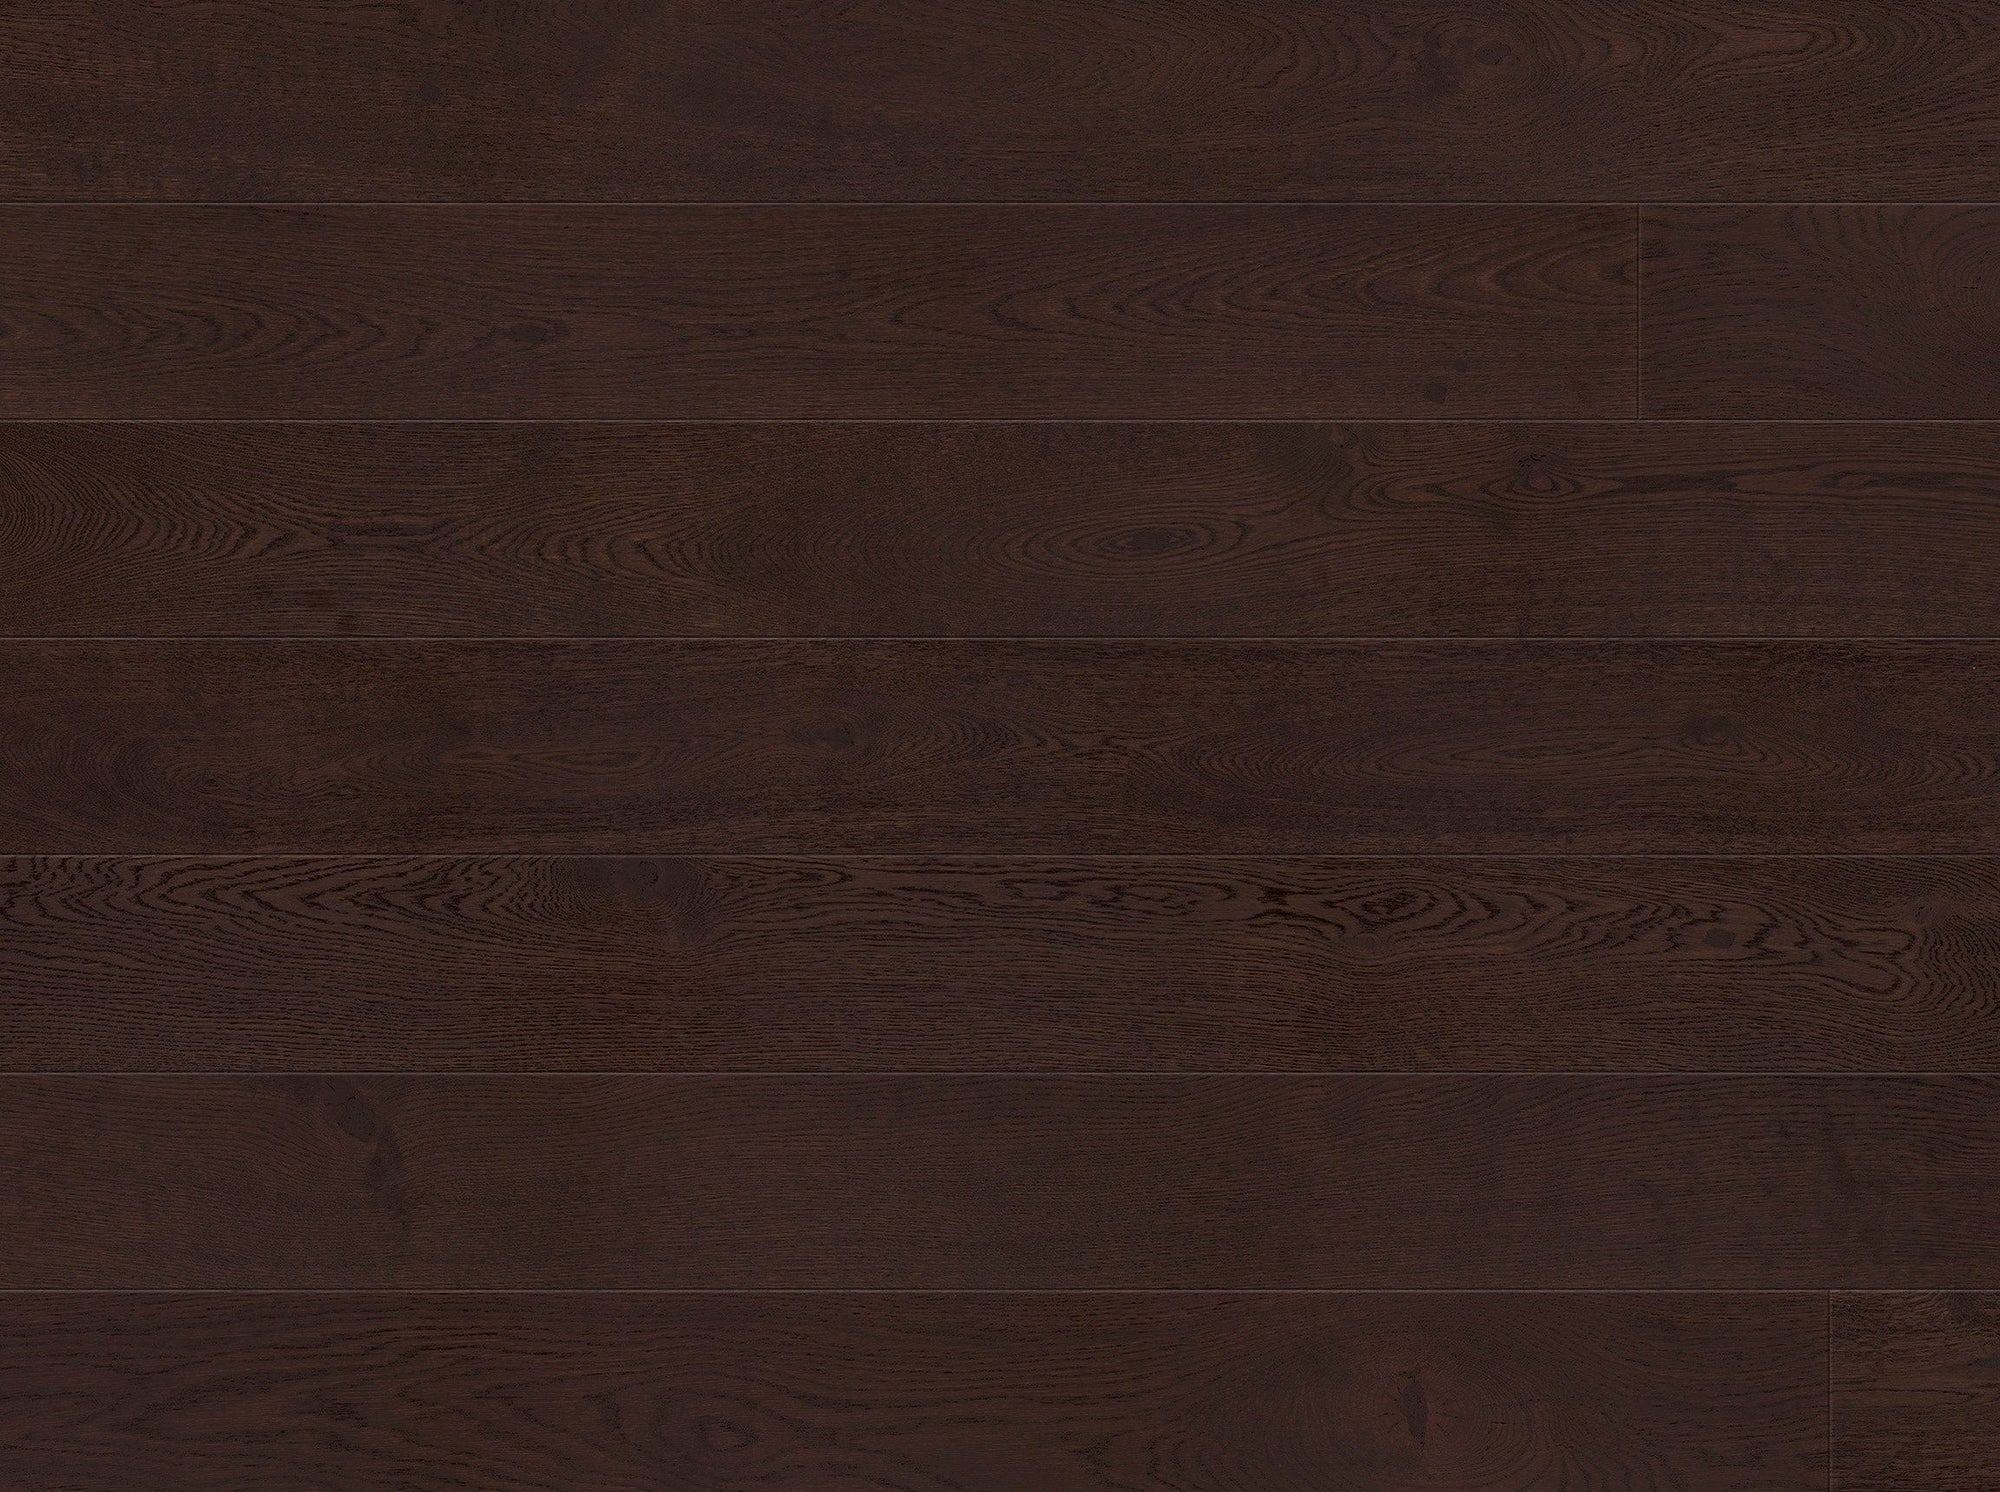 UV Matt Lacquered Ashton & Rose Forden engineered dark brown wood floor from our Vinyl Flooring collection